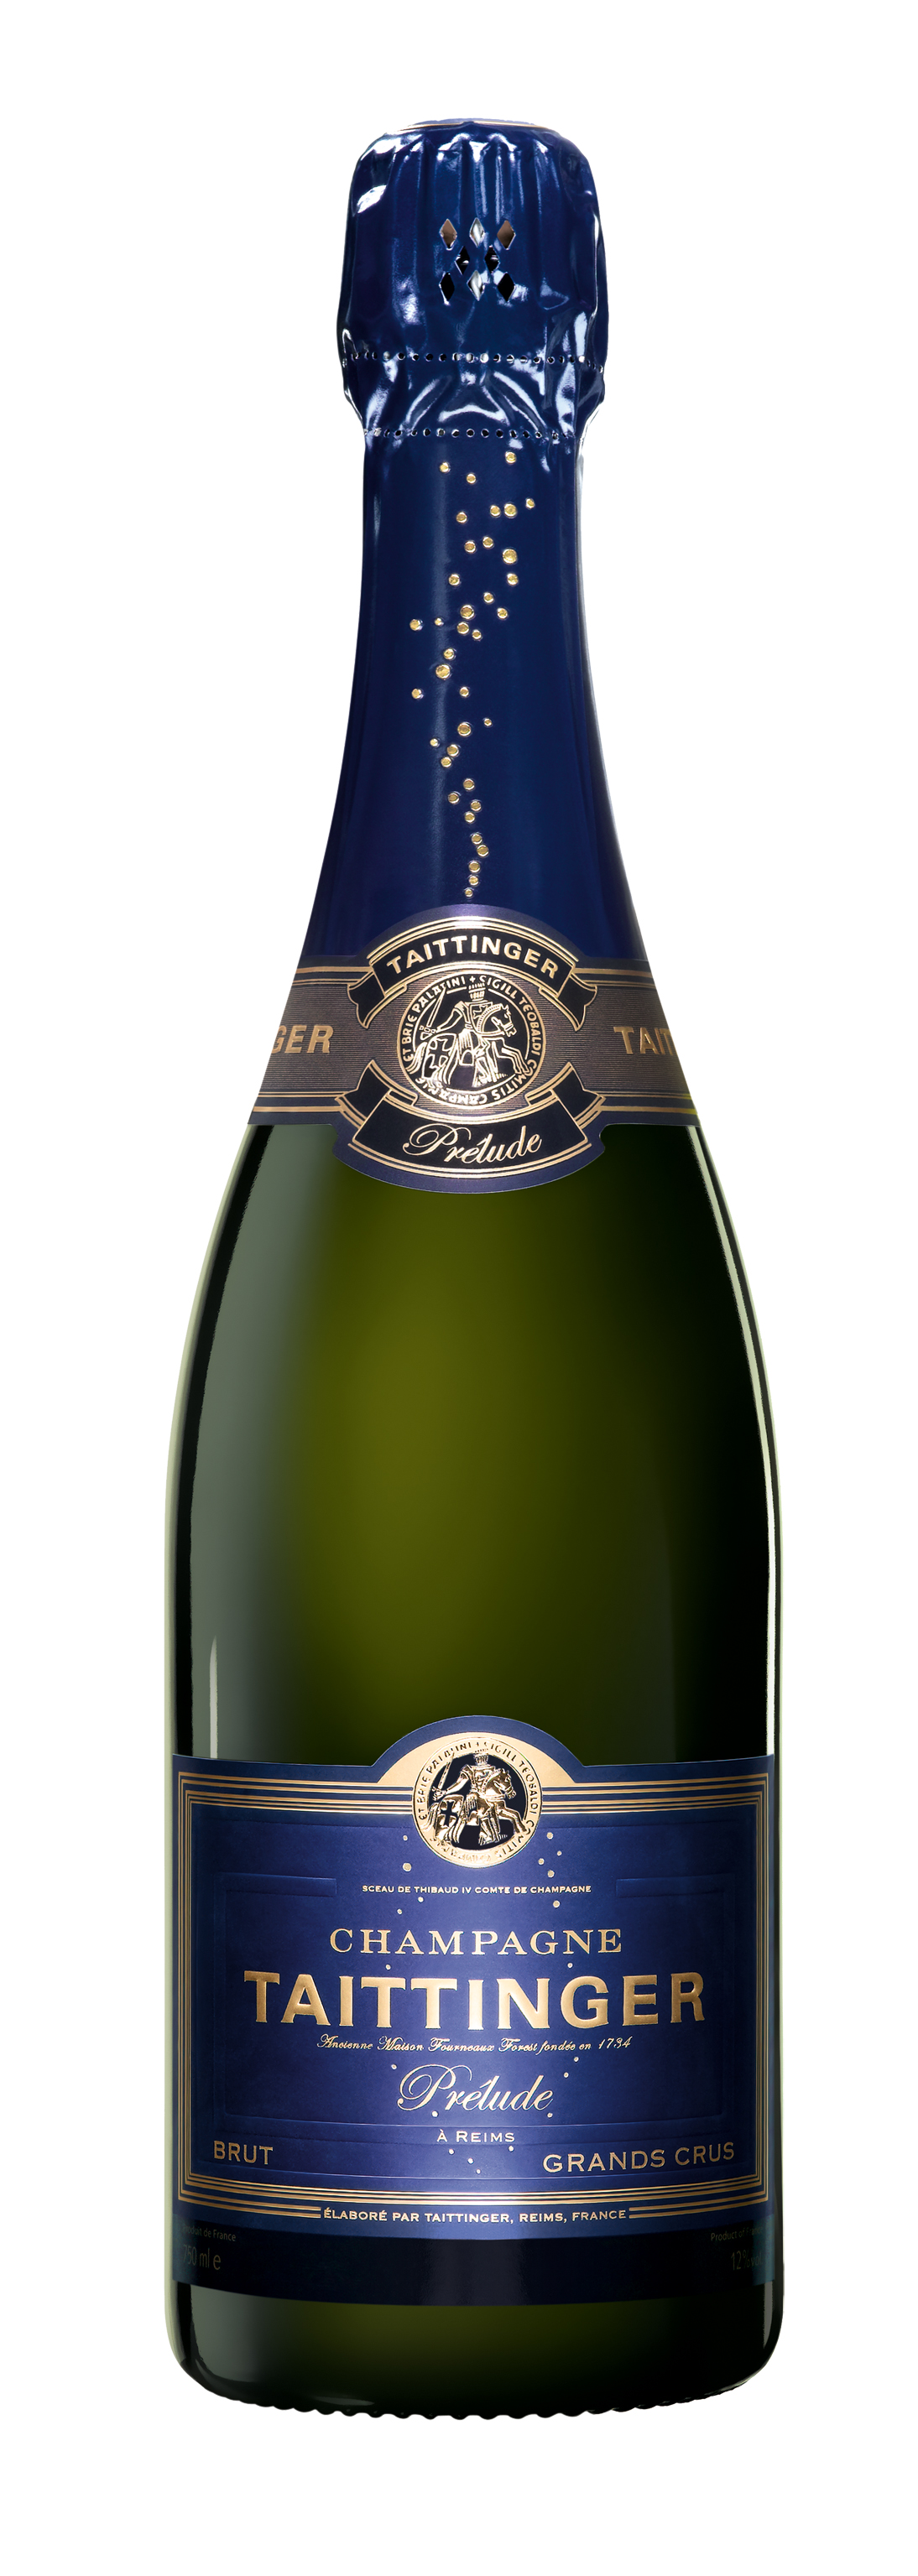 Champagne Taittinger Prélude Champagne Grand Cru, champagne brut 75 cl